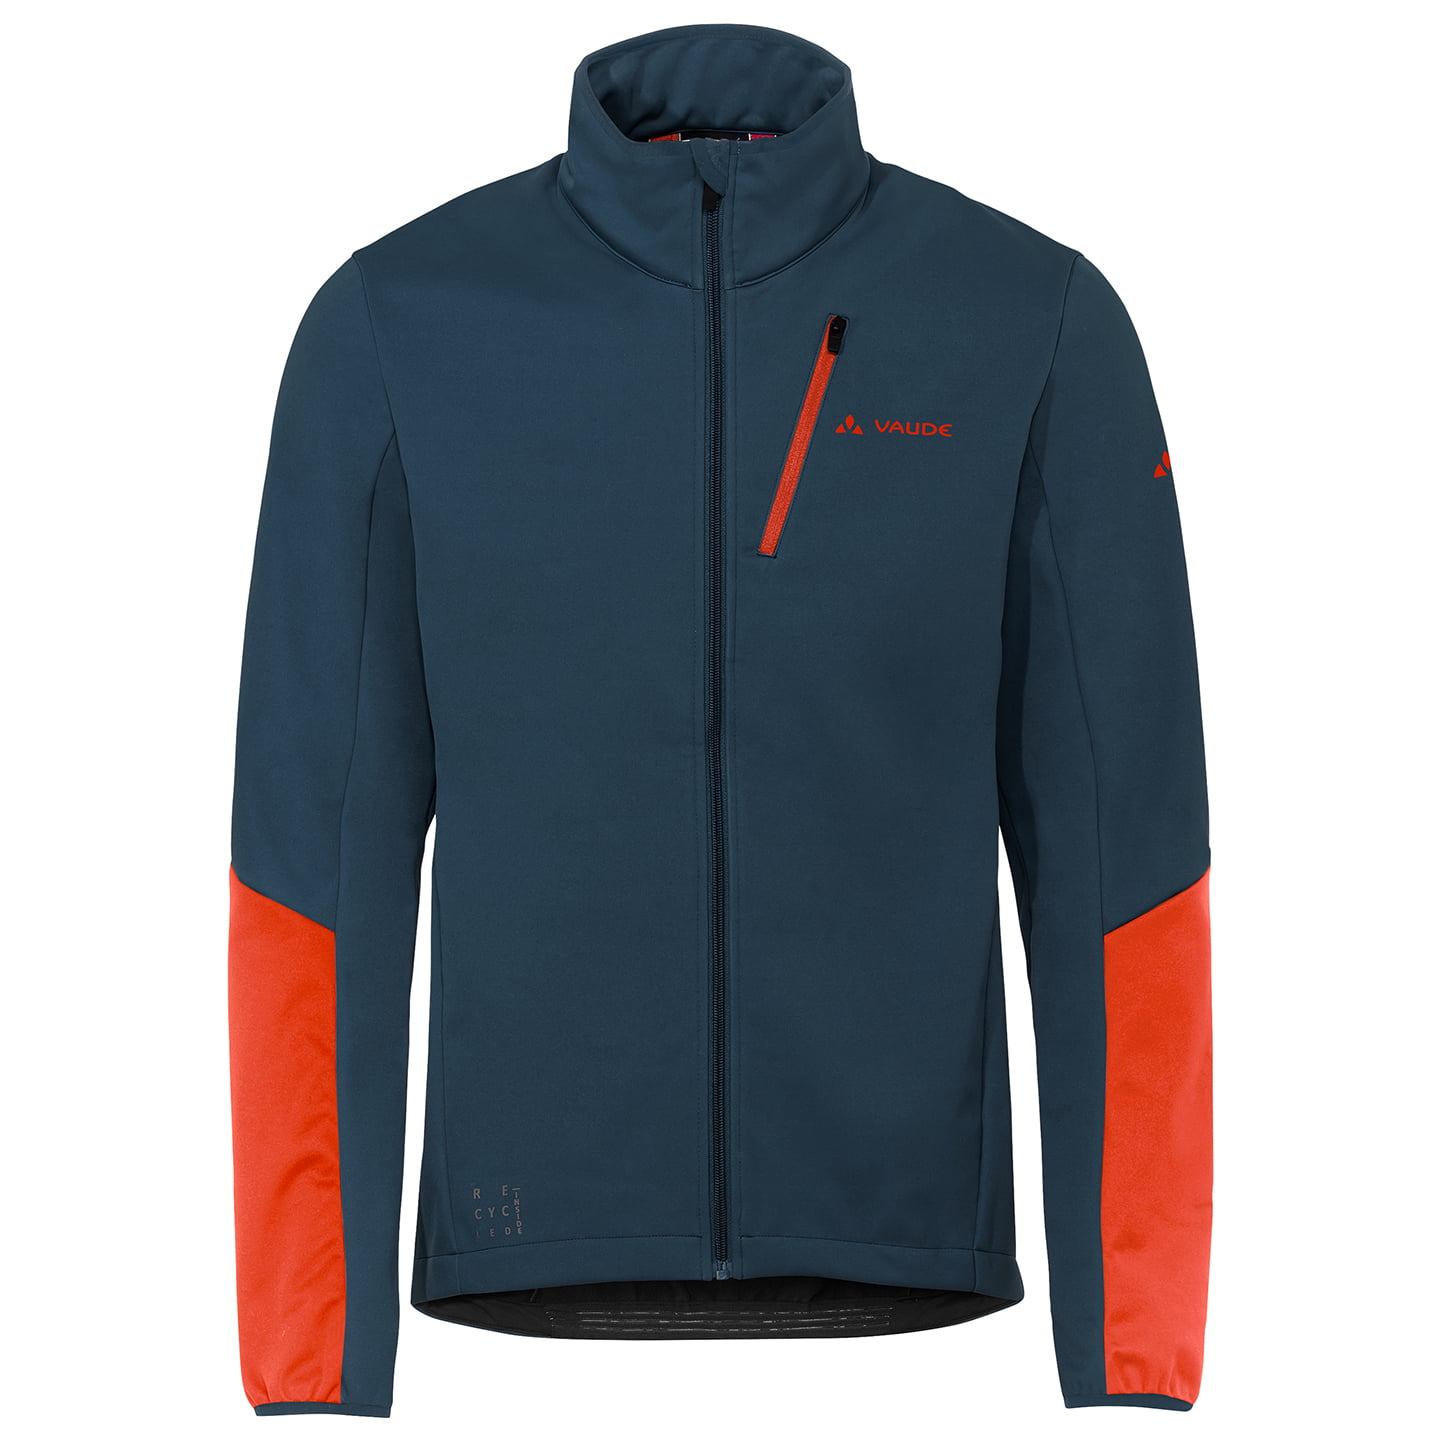 VAUDE Matera II winter jacket Thermal Jacket, for men, size M, Cycle jacket, Cycling clothing